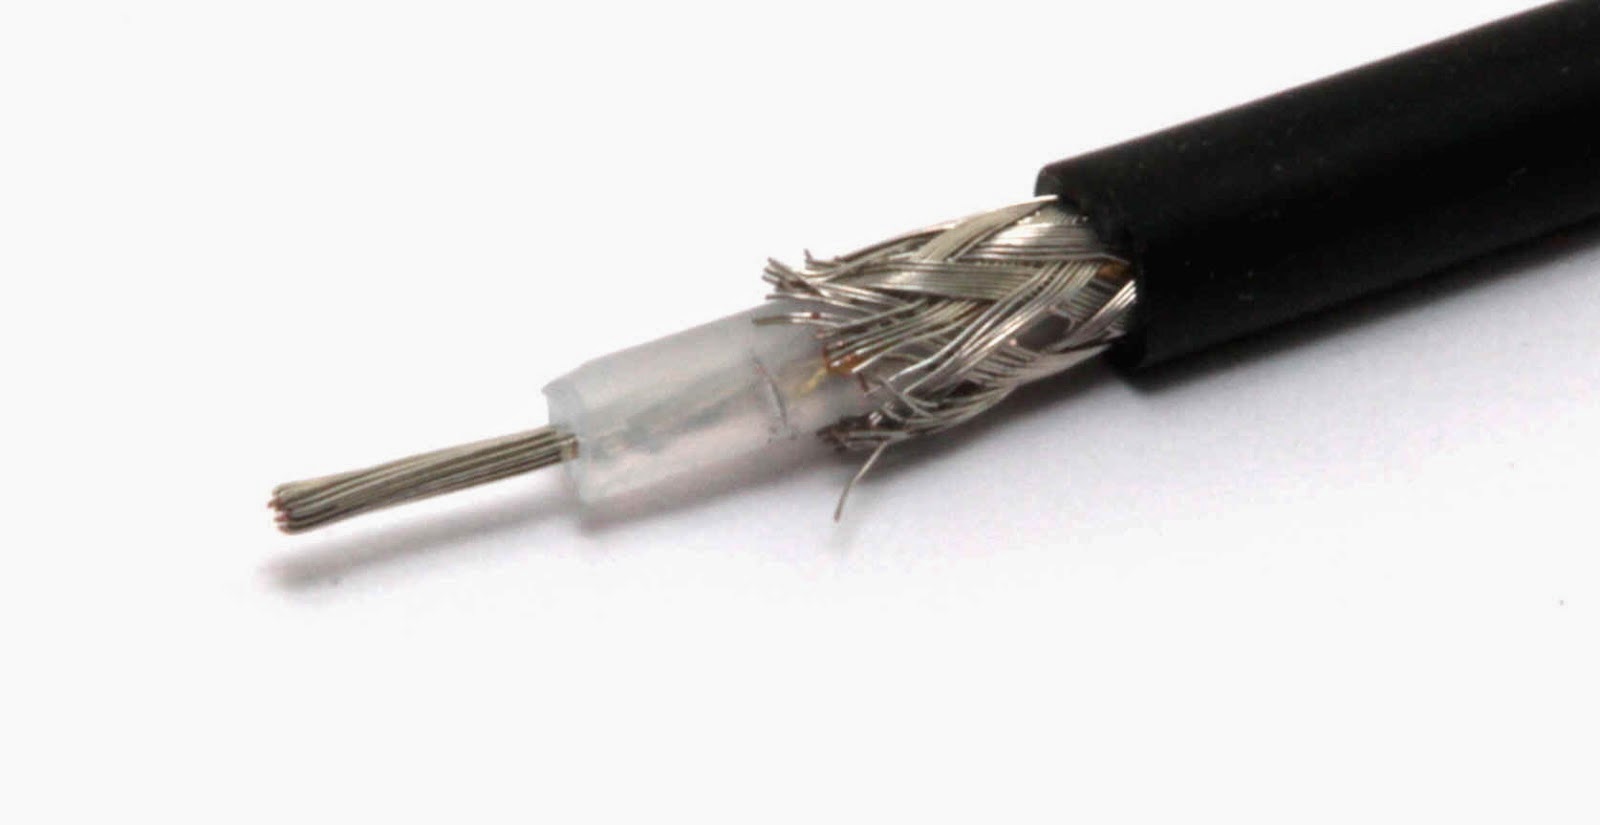 Kelebihan dan Kekurangan Kabel UTP, Coaxial, Fiber Optic dan Wirelles